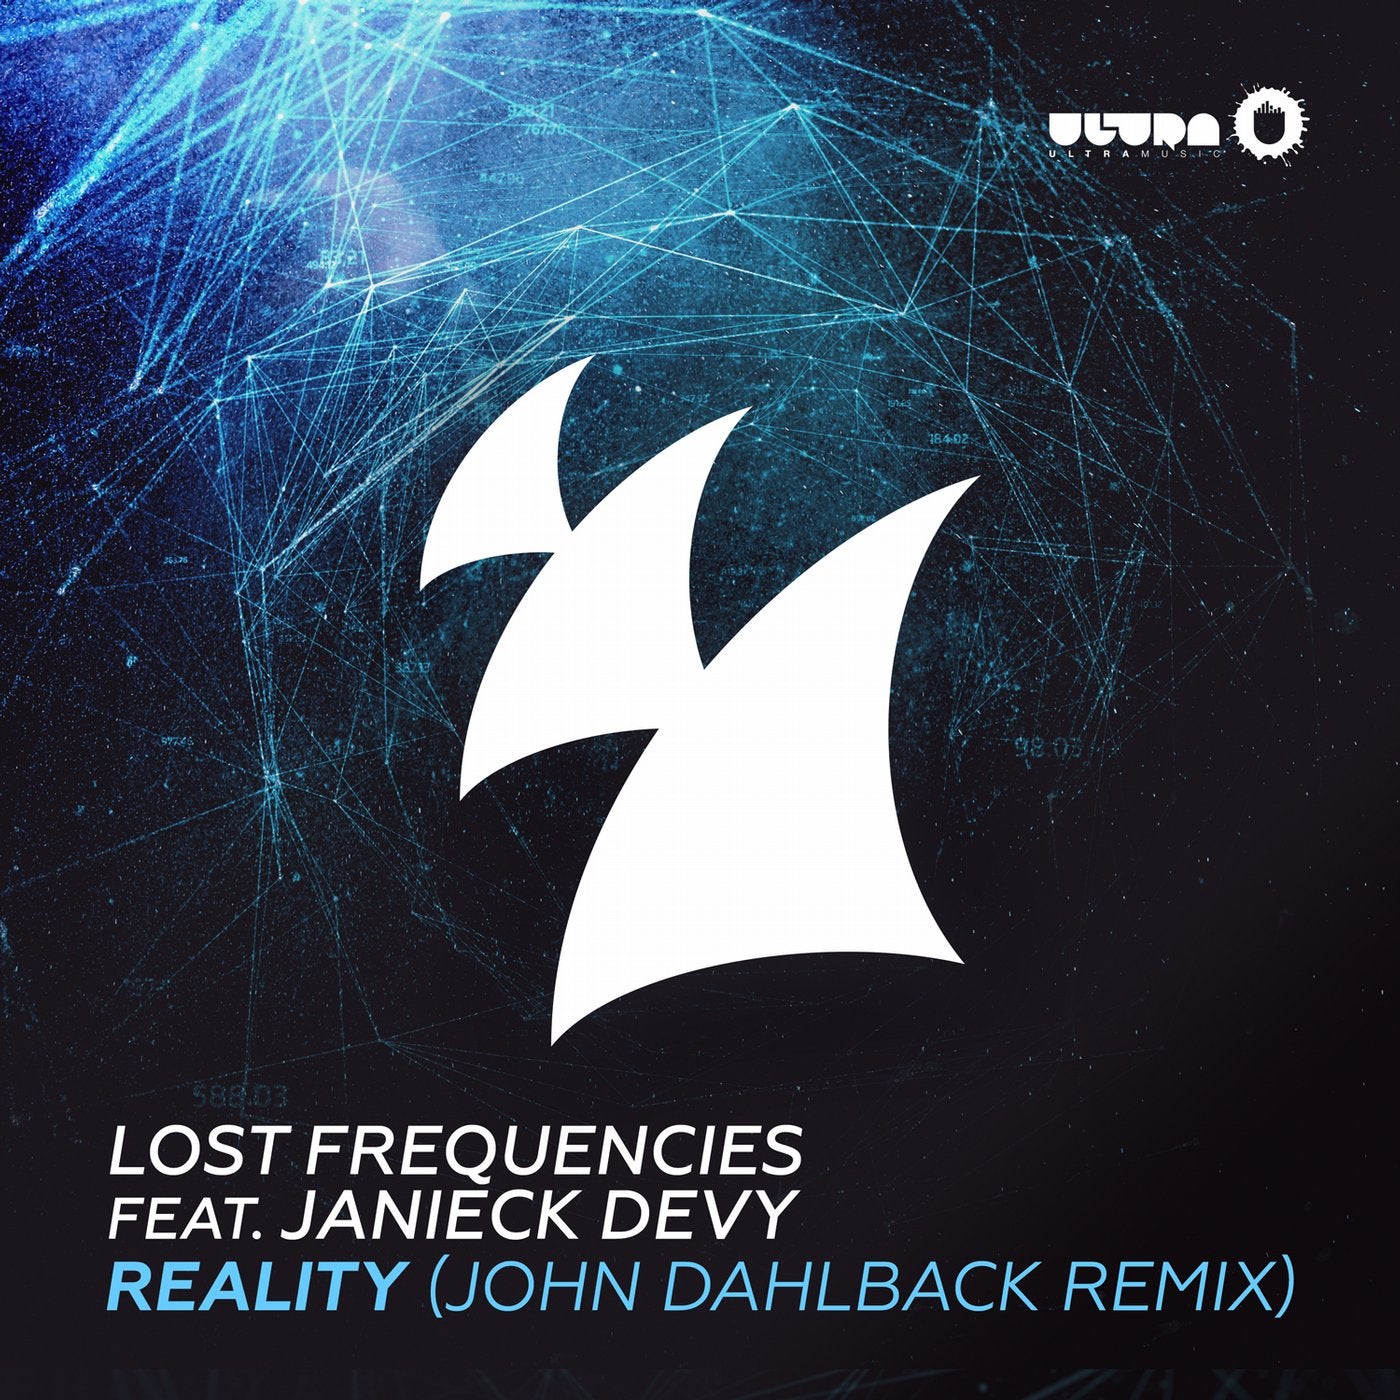 Reality - John Dahlback Remix